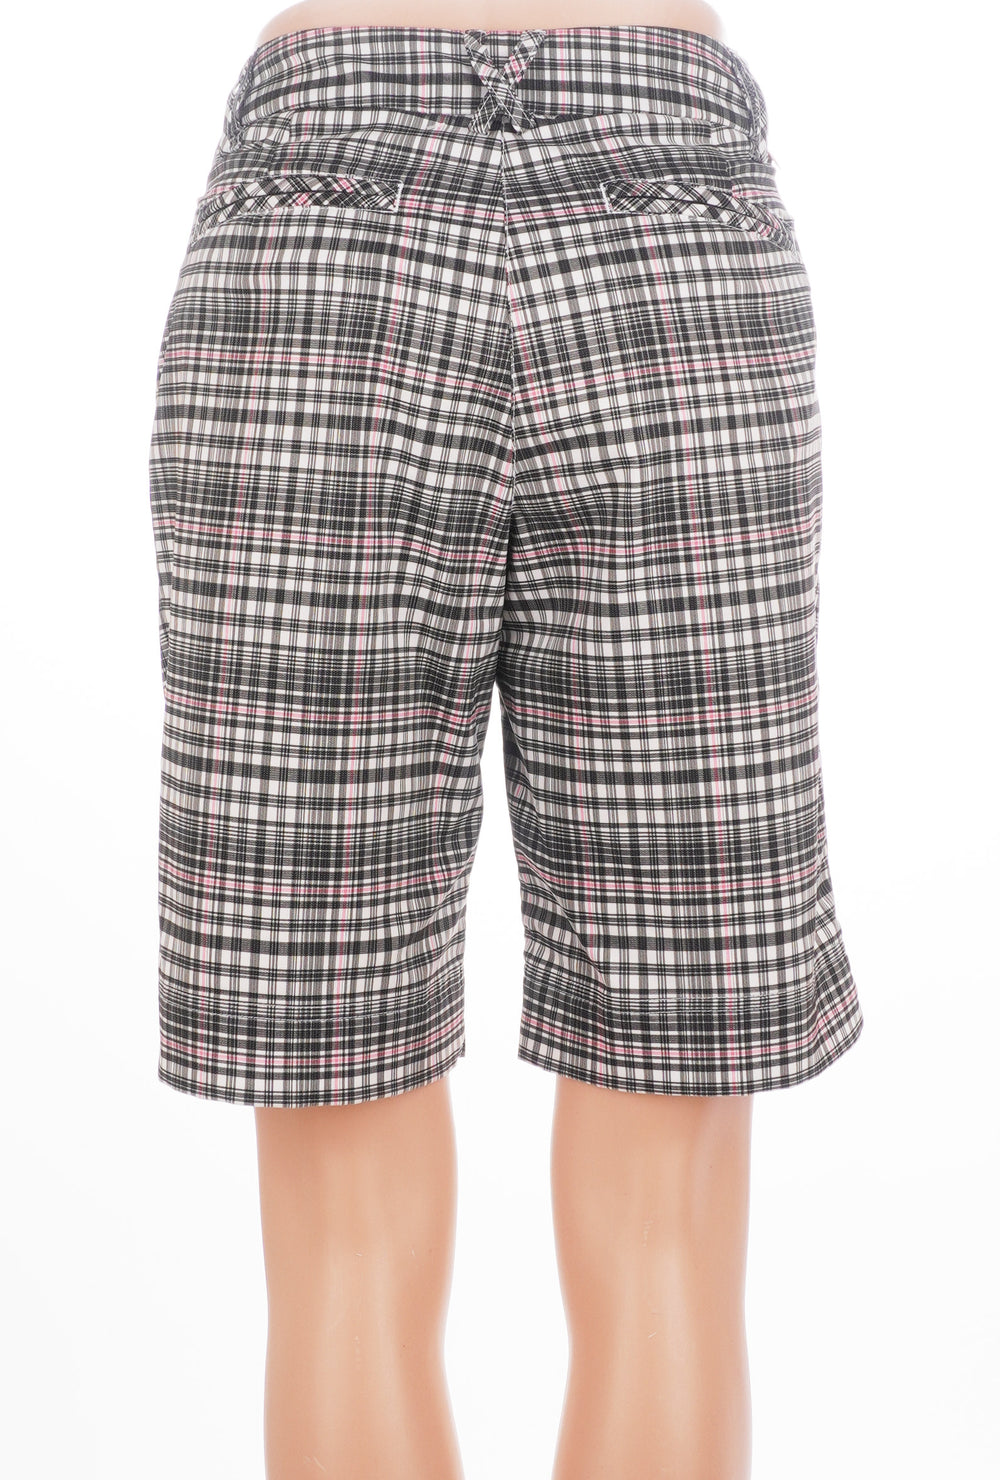 Puma Plaid Golf Tech Bermuda Shorts - Size 4 - Skorzie